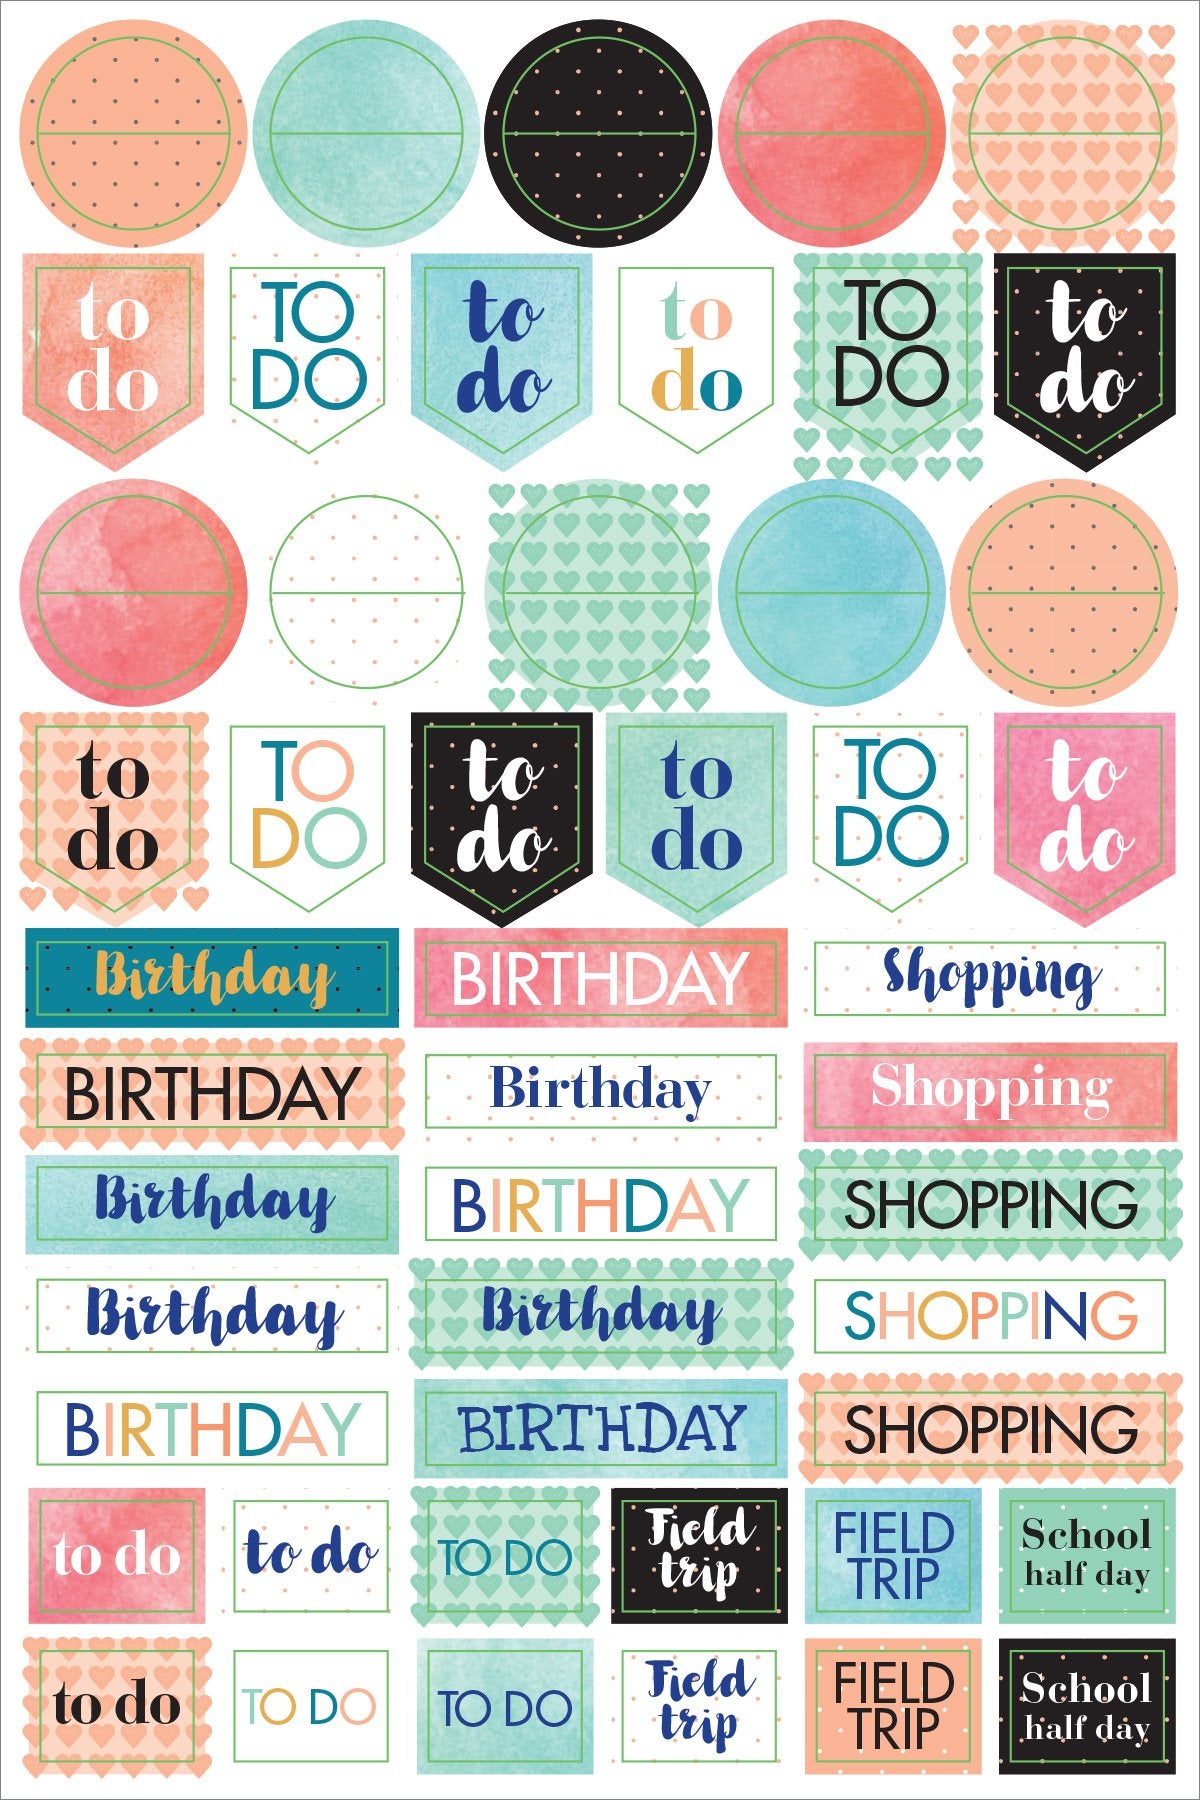 HAPPY BIRTHDAY Planner Stickers